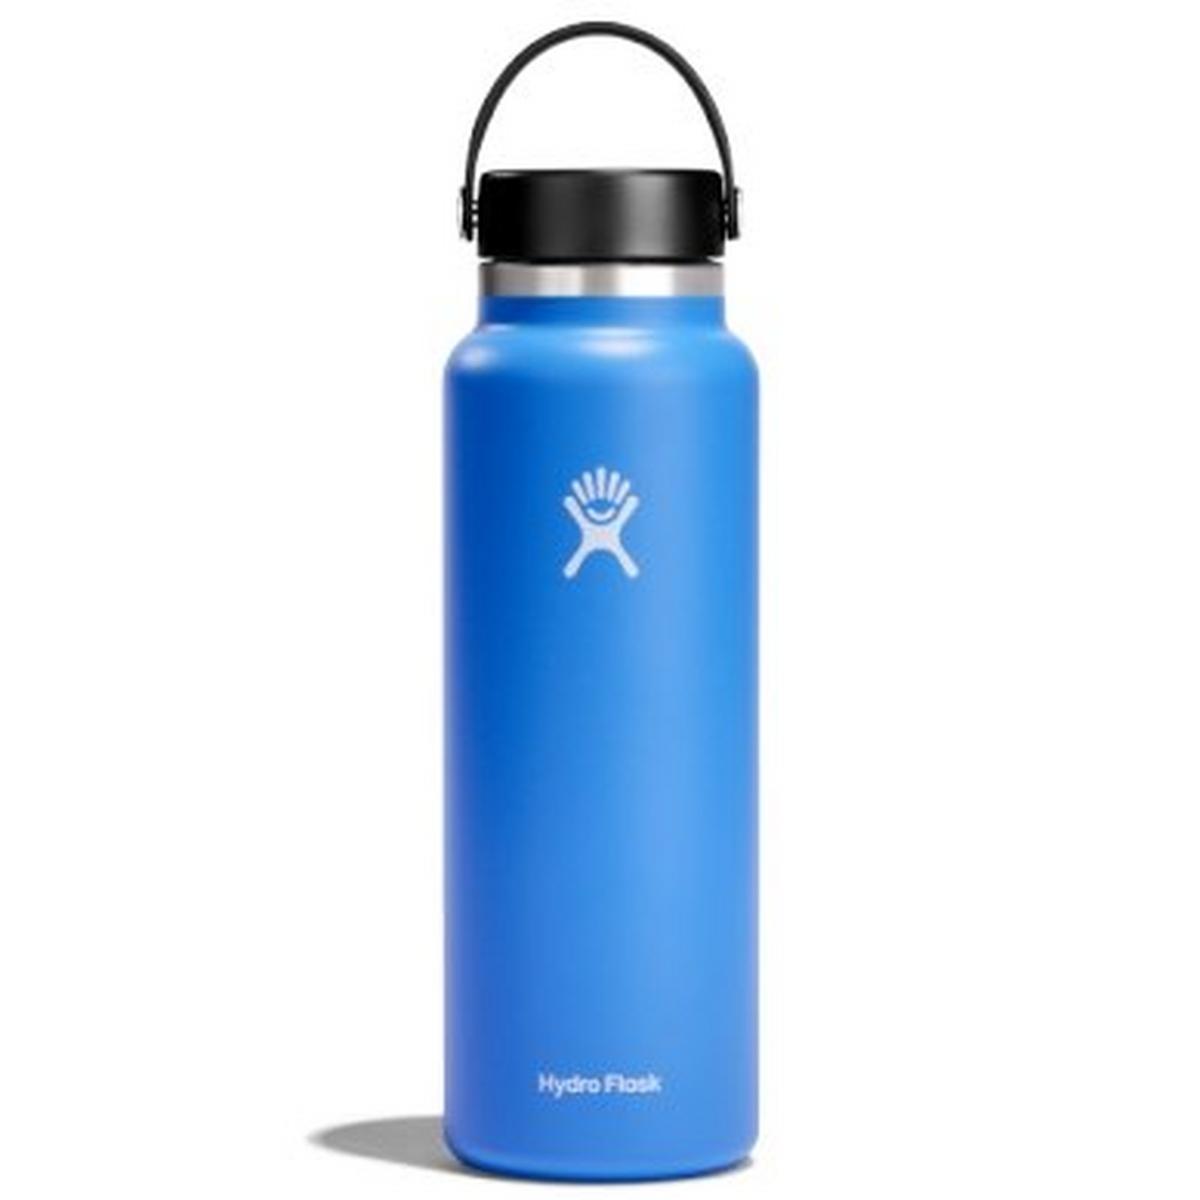 Hydro Flask 32oz Wide Mouth Water Bottle - Blue